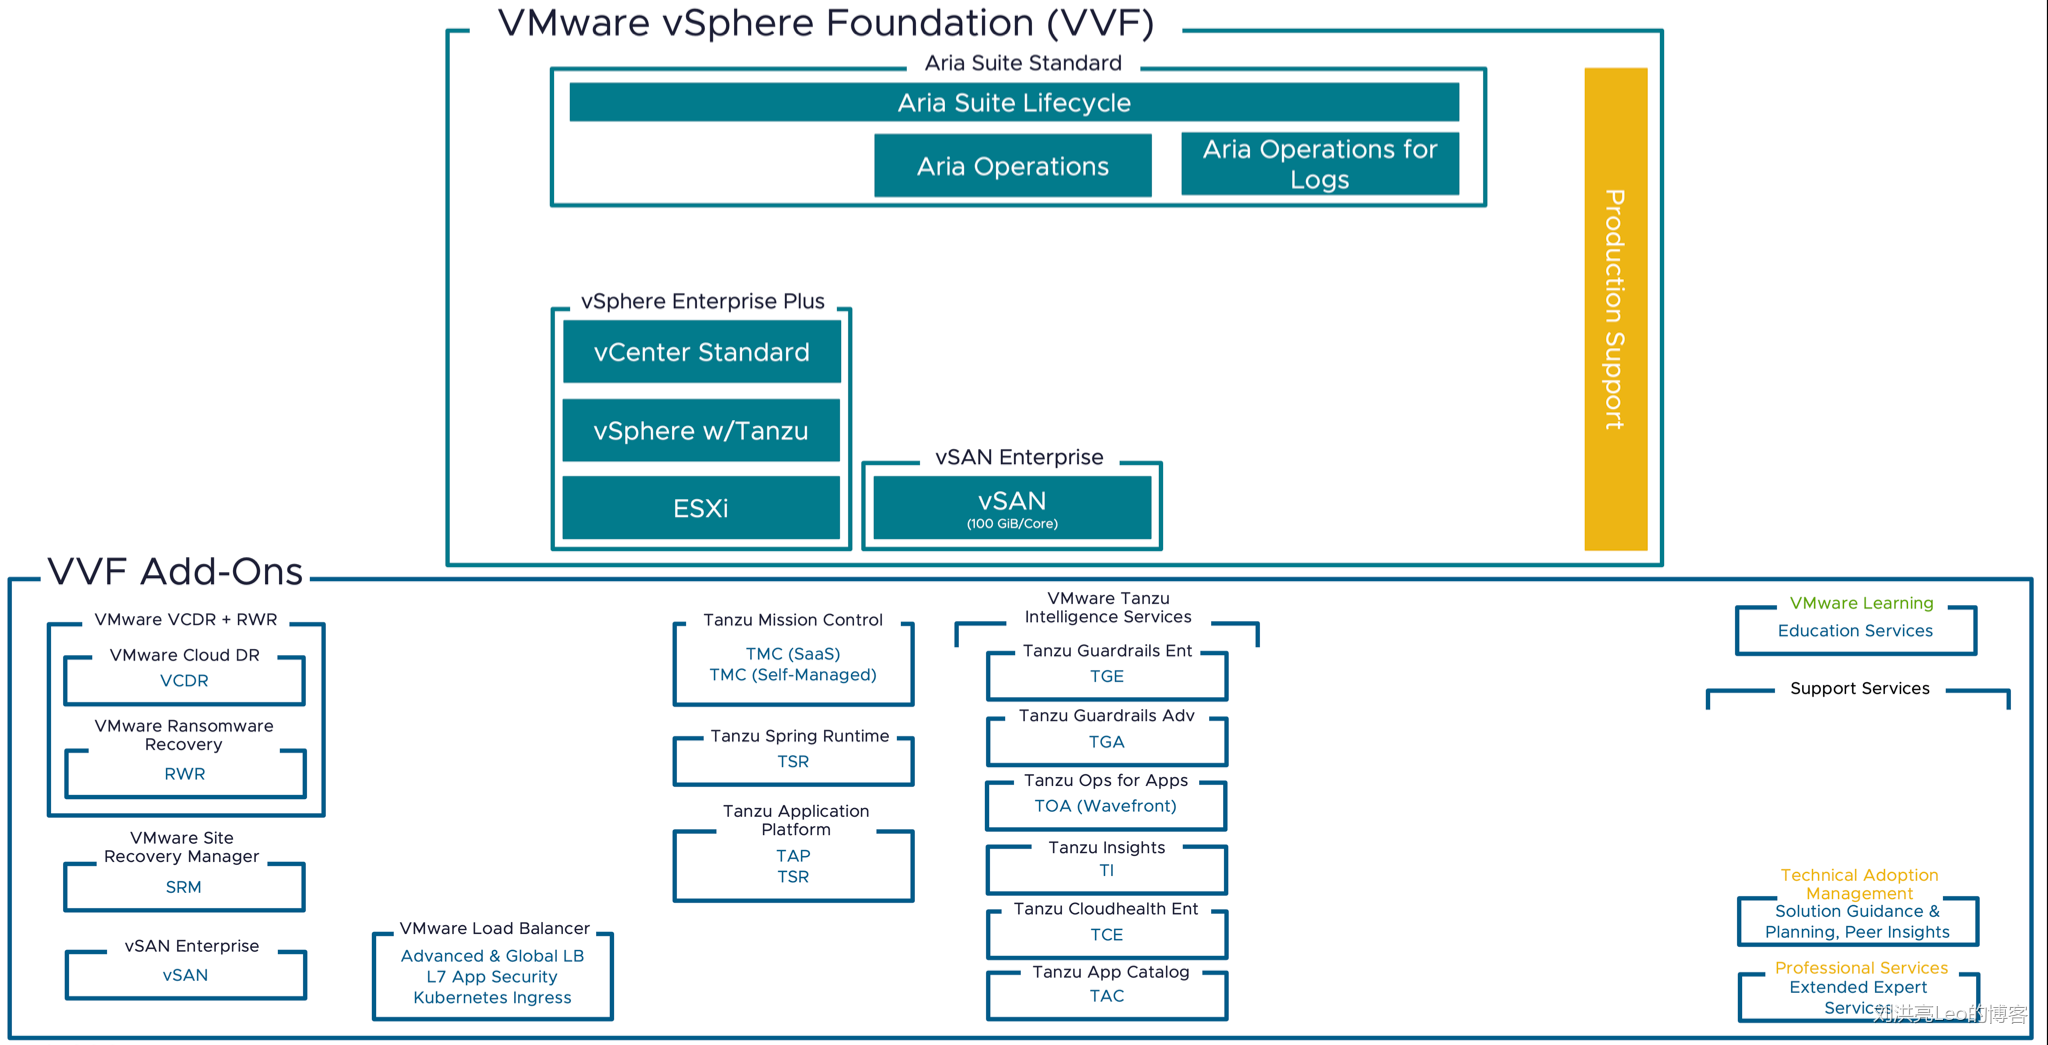 VMware vSphere Foundation (VVF)